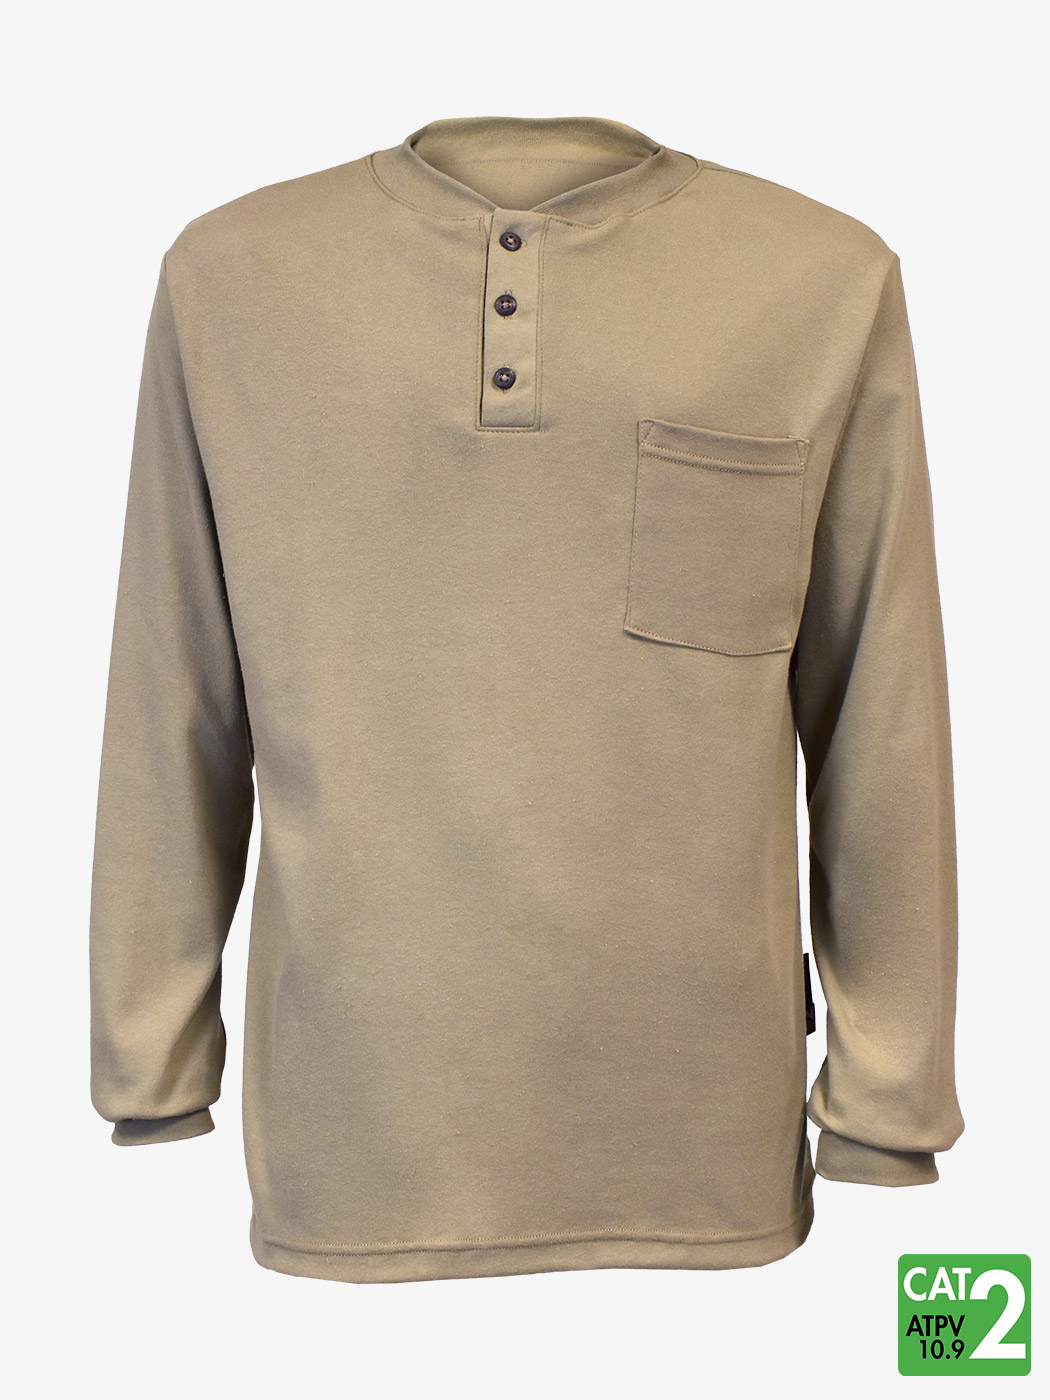 Ultrasoft® 6 oz Henley FR long sleeve shirt